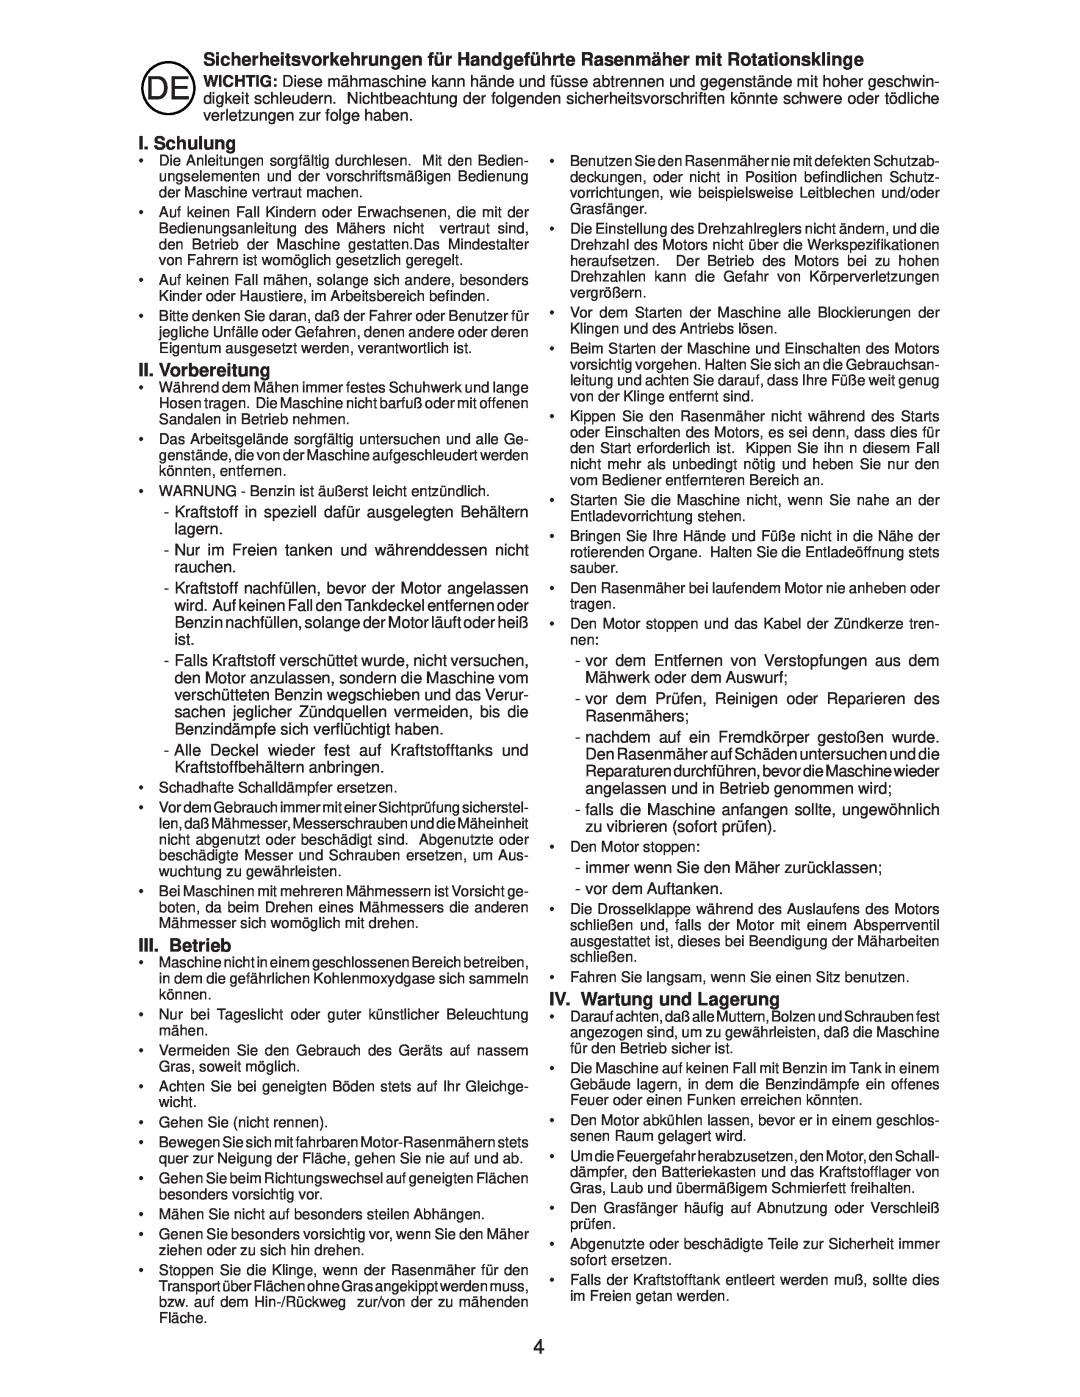 Husqvarna R145SV instruction manual I. Schulung, II. Vorbereitung, III. Betrieb, IV. Wartung und Lagerung 